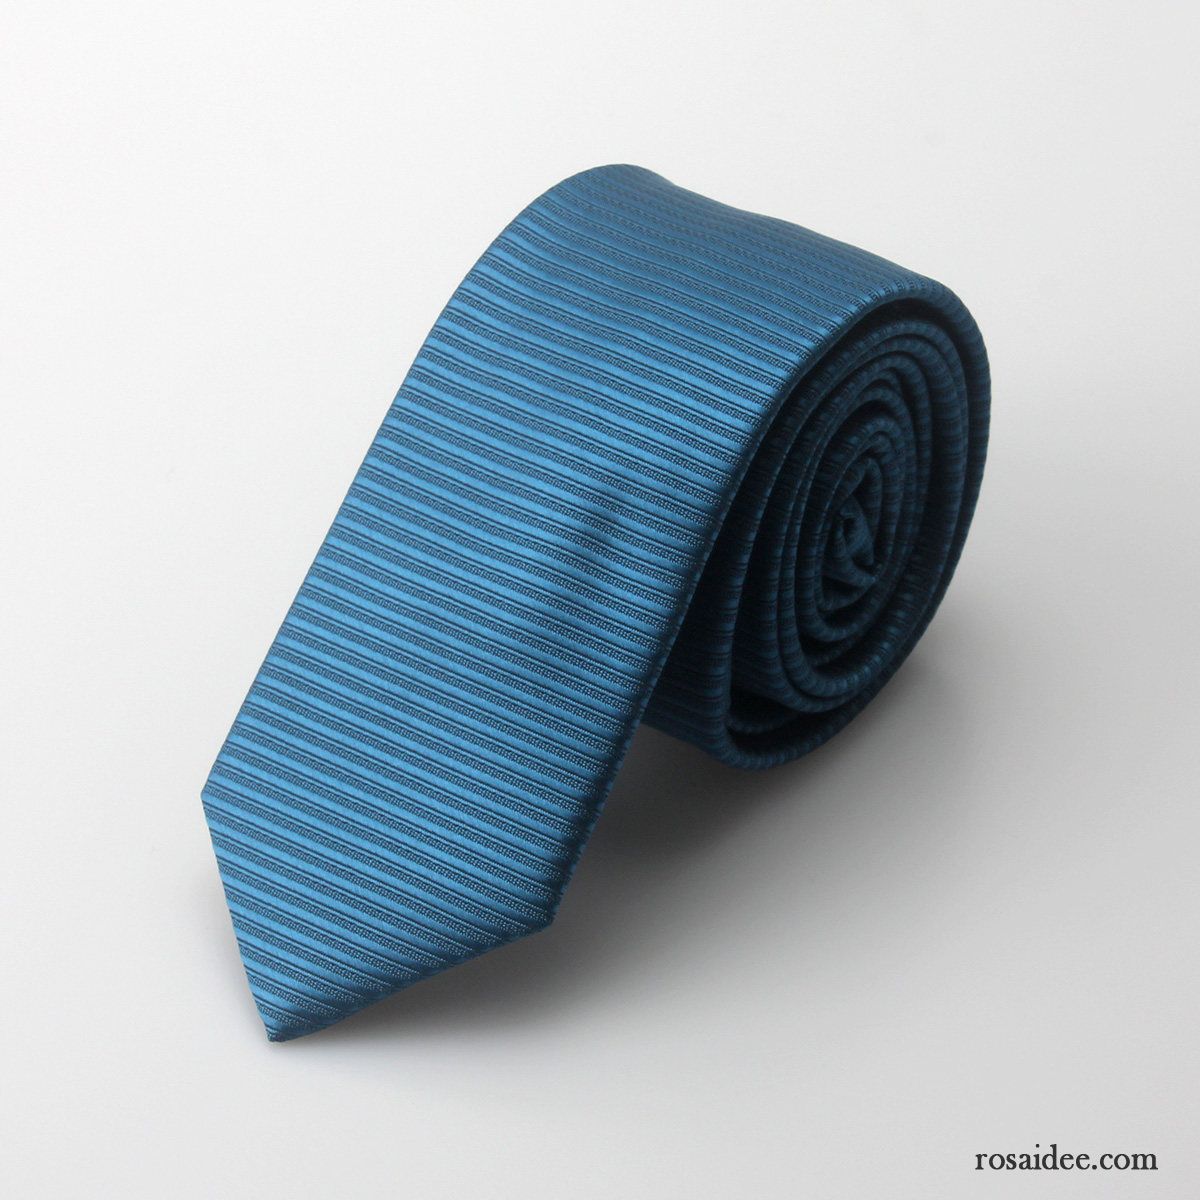 Krawatte Herren Neu Schmale Einfarbig 5 Cm Mini 2019 Blau Schwarz